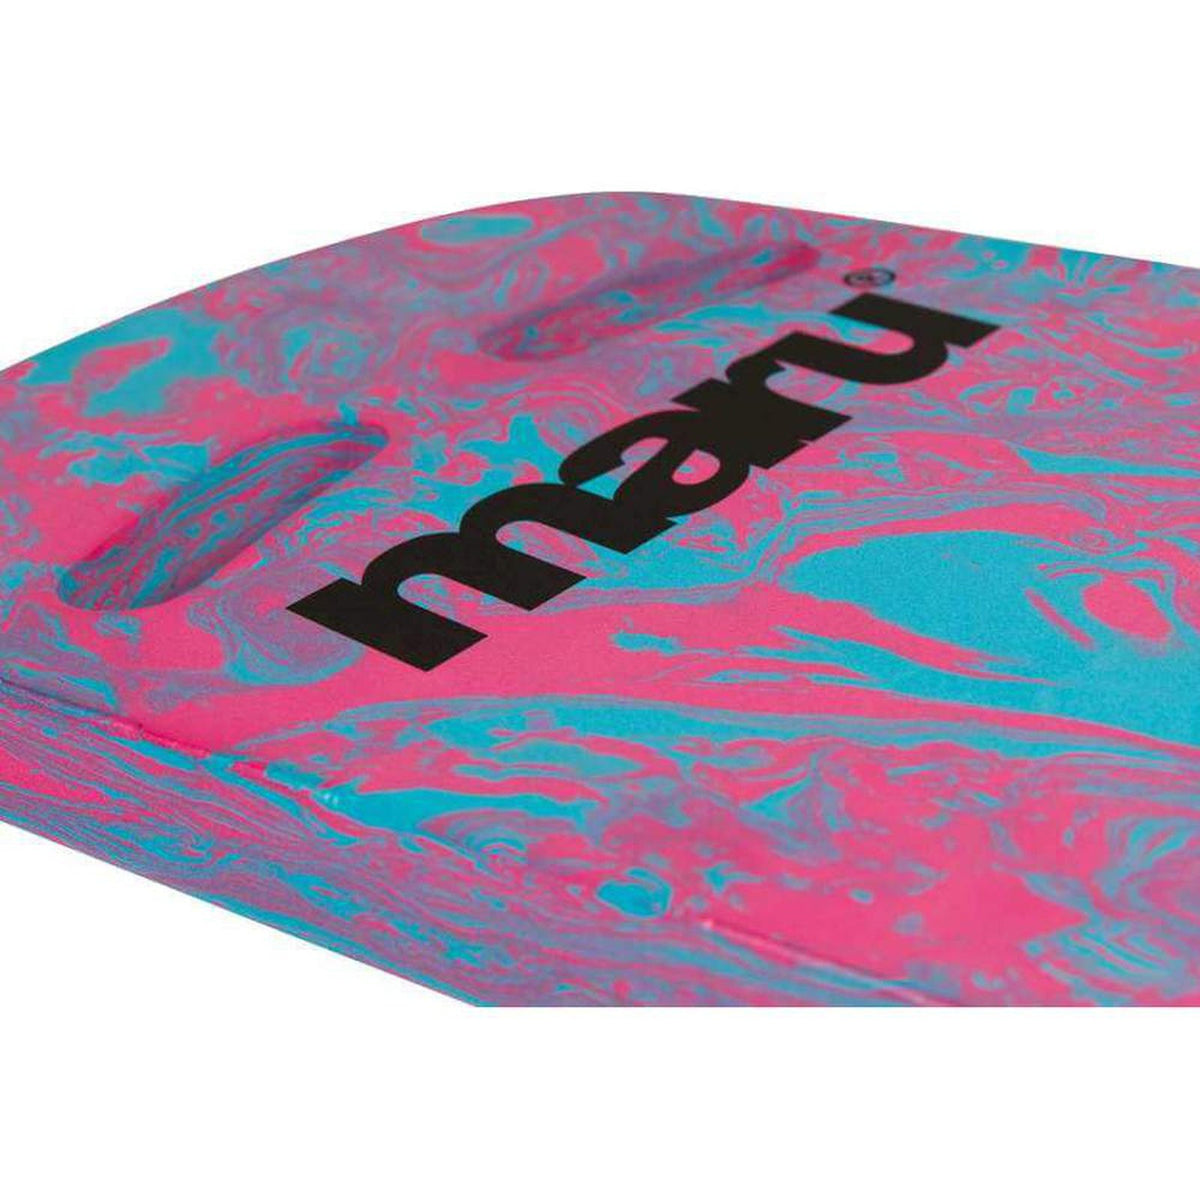 Maru Swirl Two Grip Fitness Kickboard - Blue/Pink